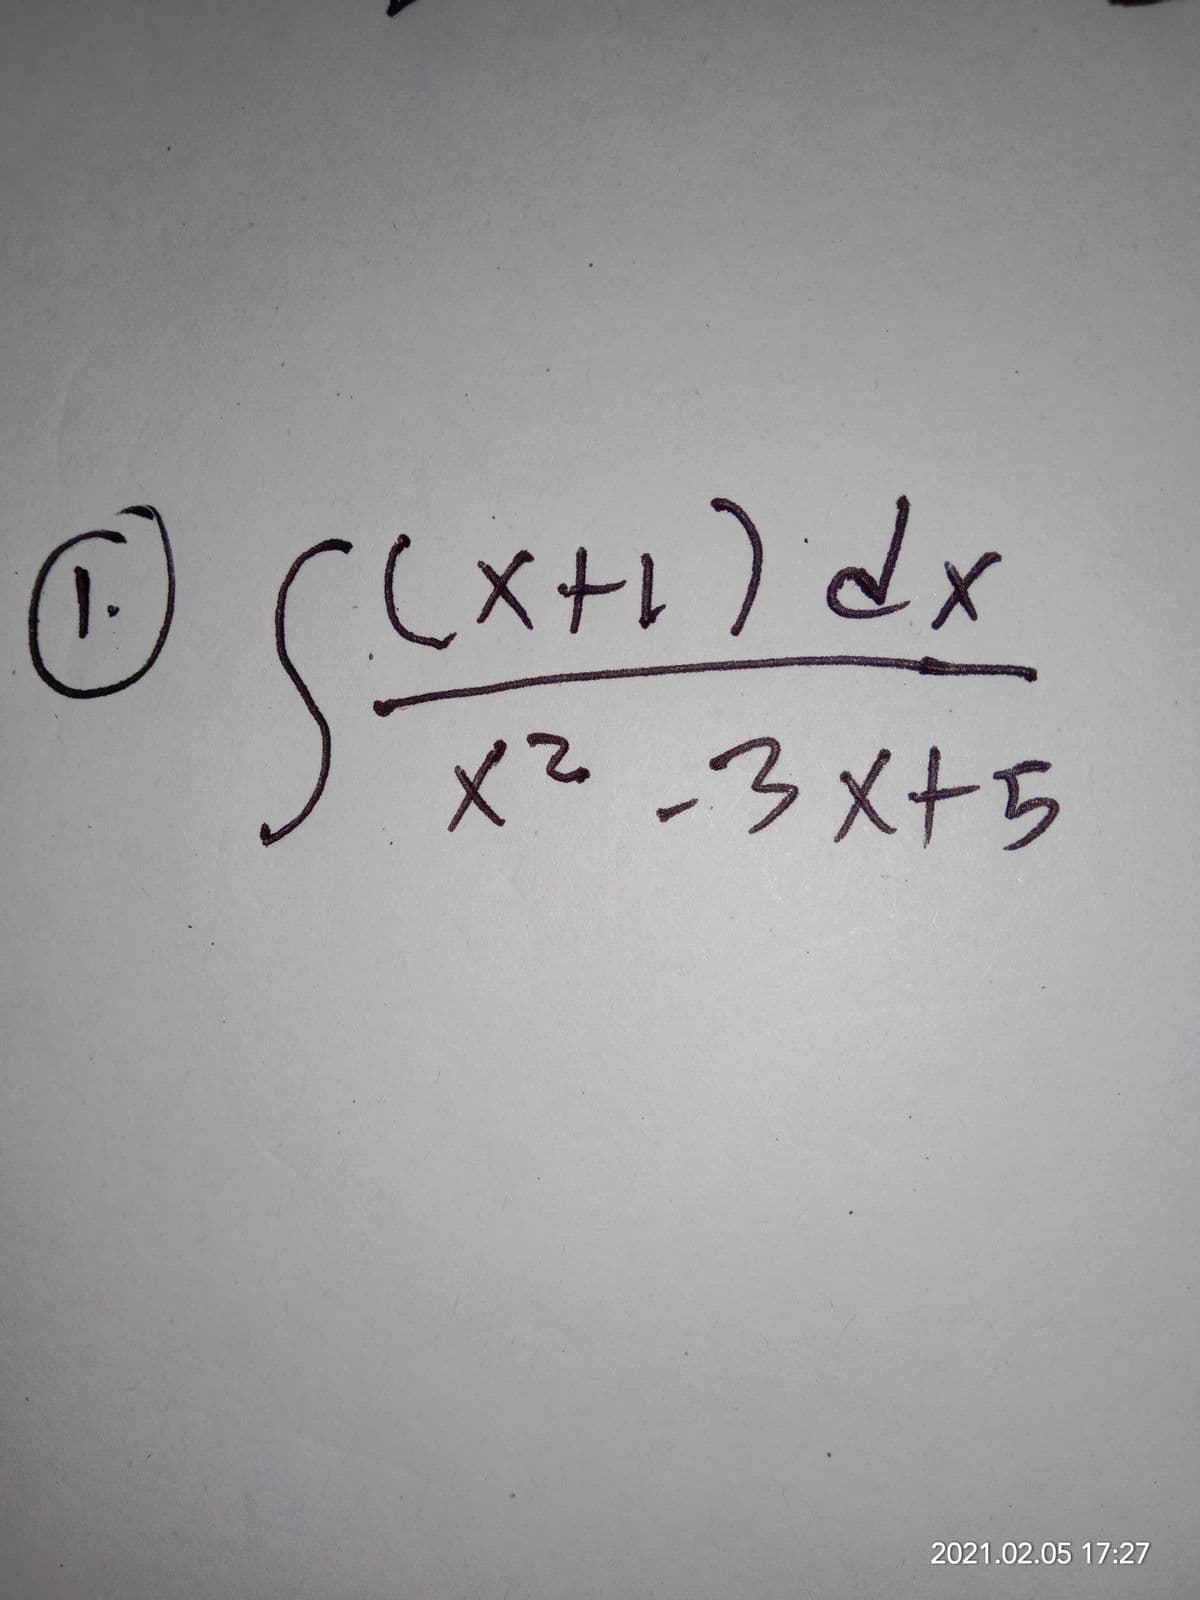 (x+) dx
x2
3メ45
2021.02.05 17:27
